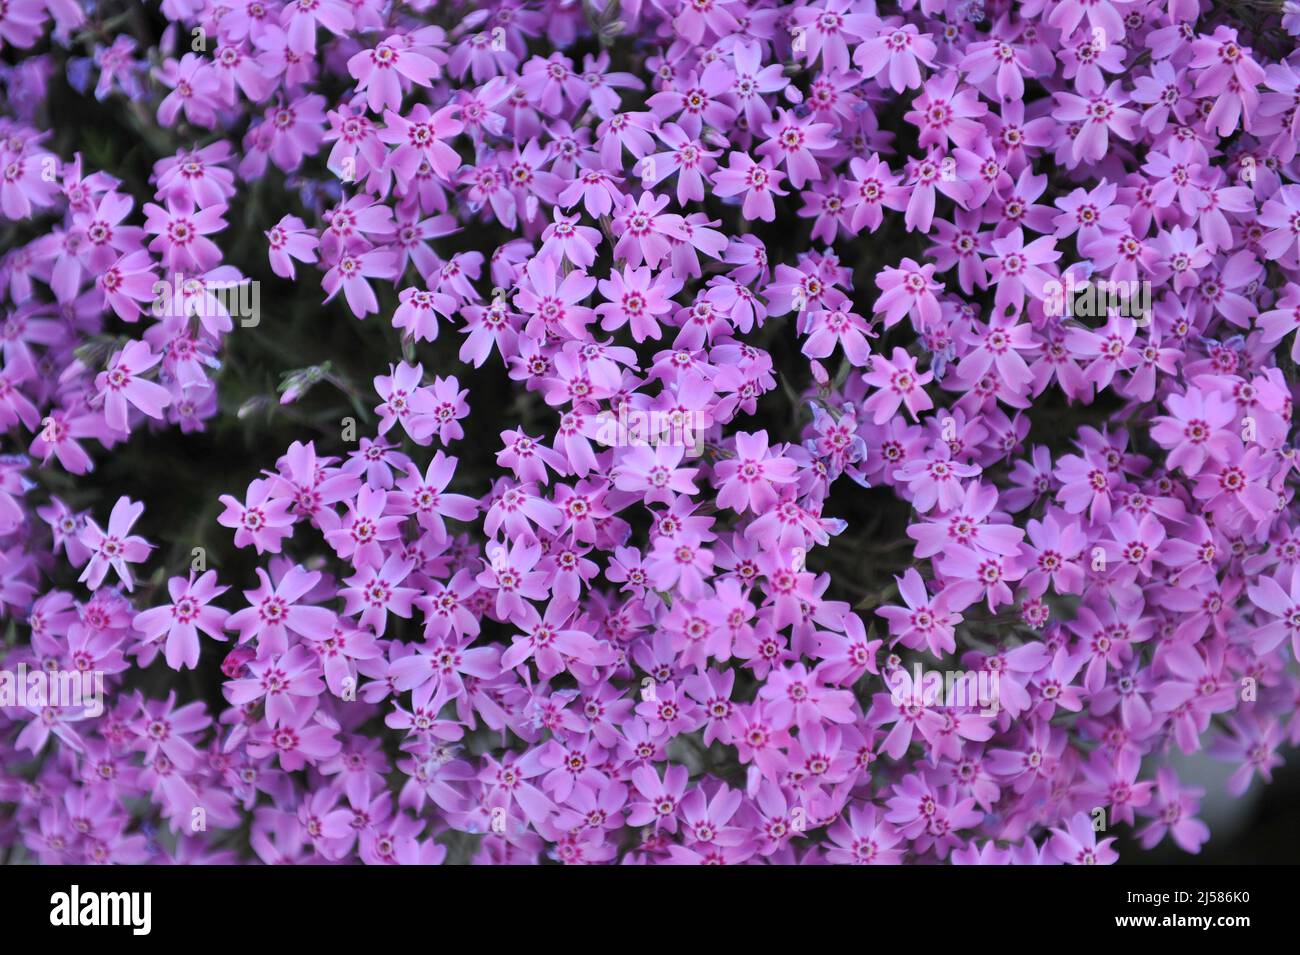 Pink moss phlox (Phlox subulata) Zwergenteppich bloom in a garden in May Stock Photo